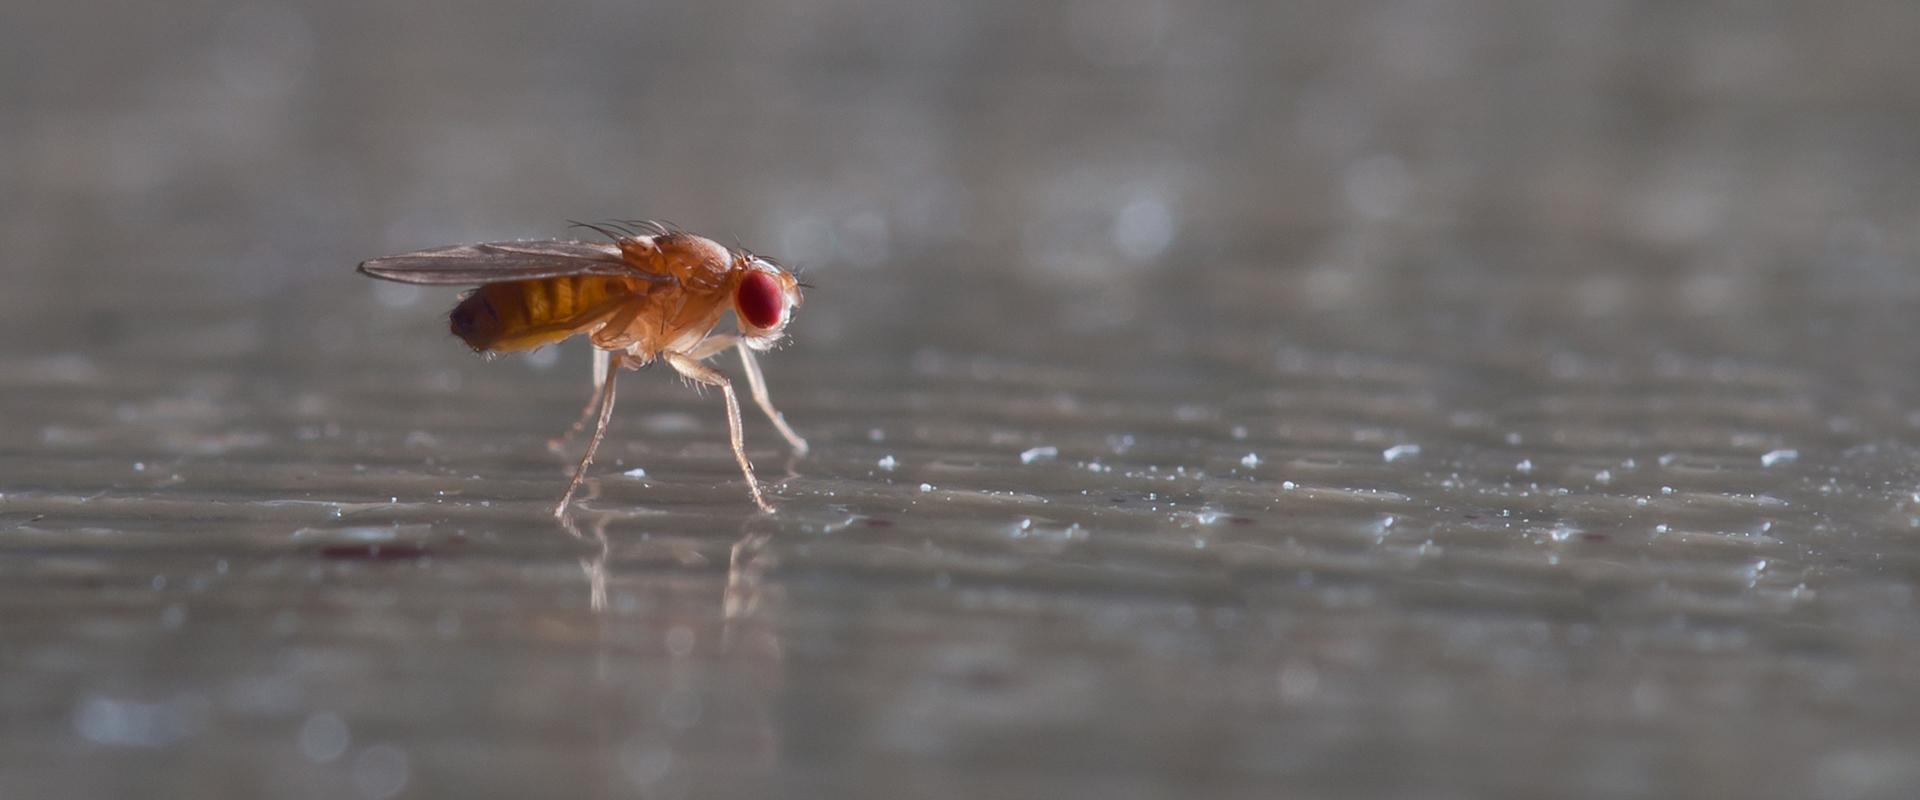 a fruit fly on a table